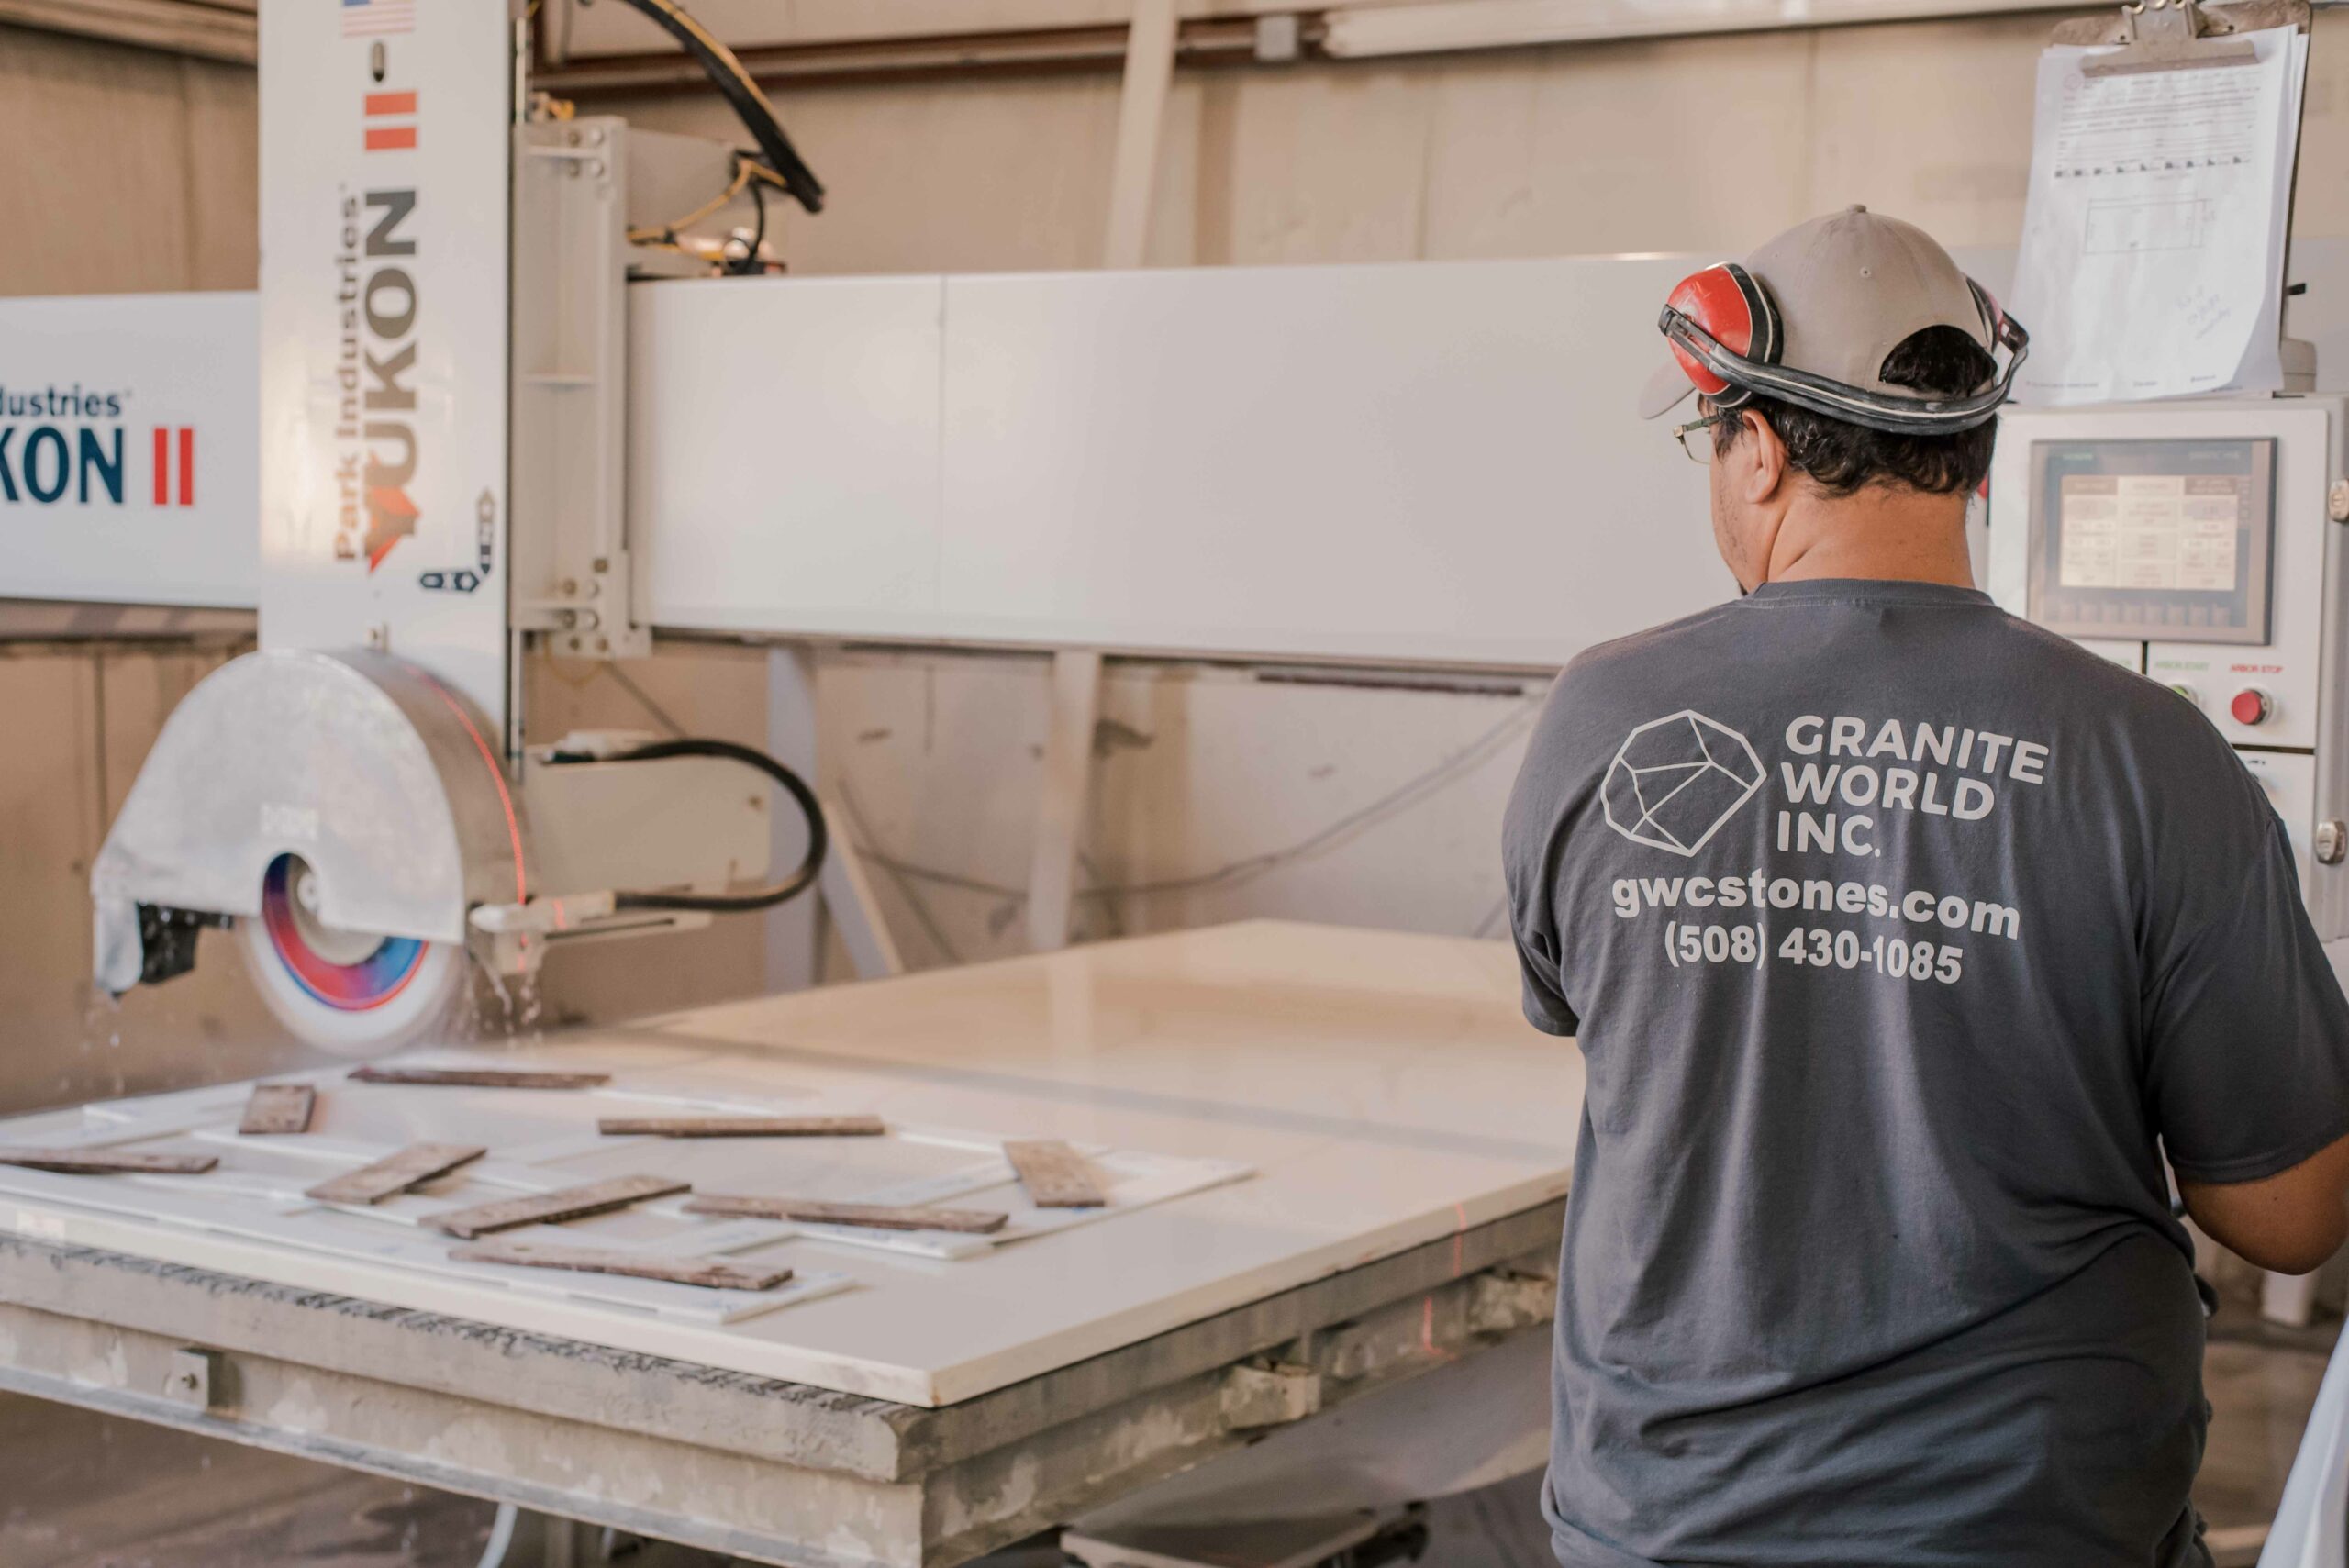 Granite World Employee Working on a countertop fabrication